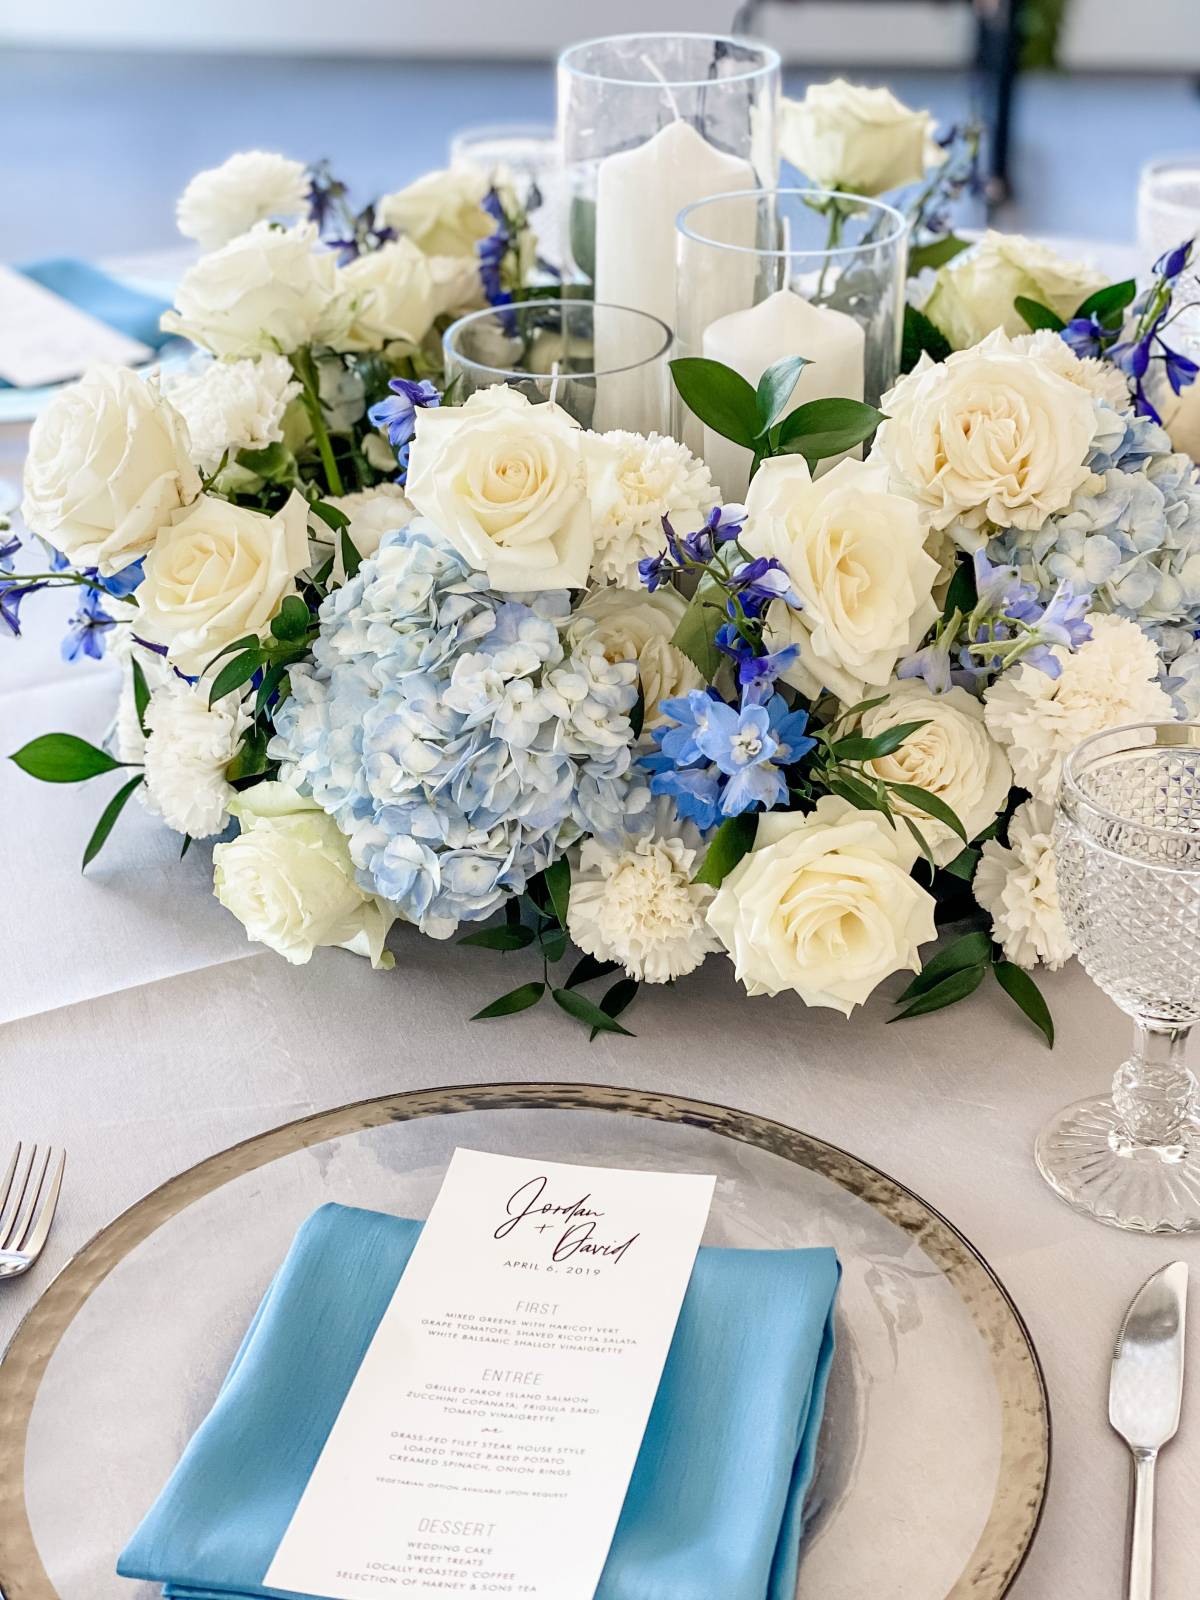 Romantic white and blue flower wedding centerpiece